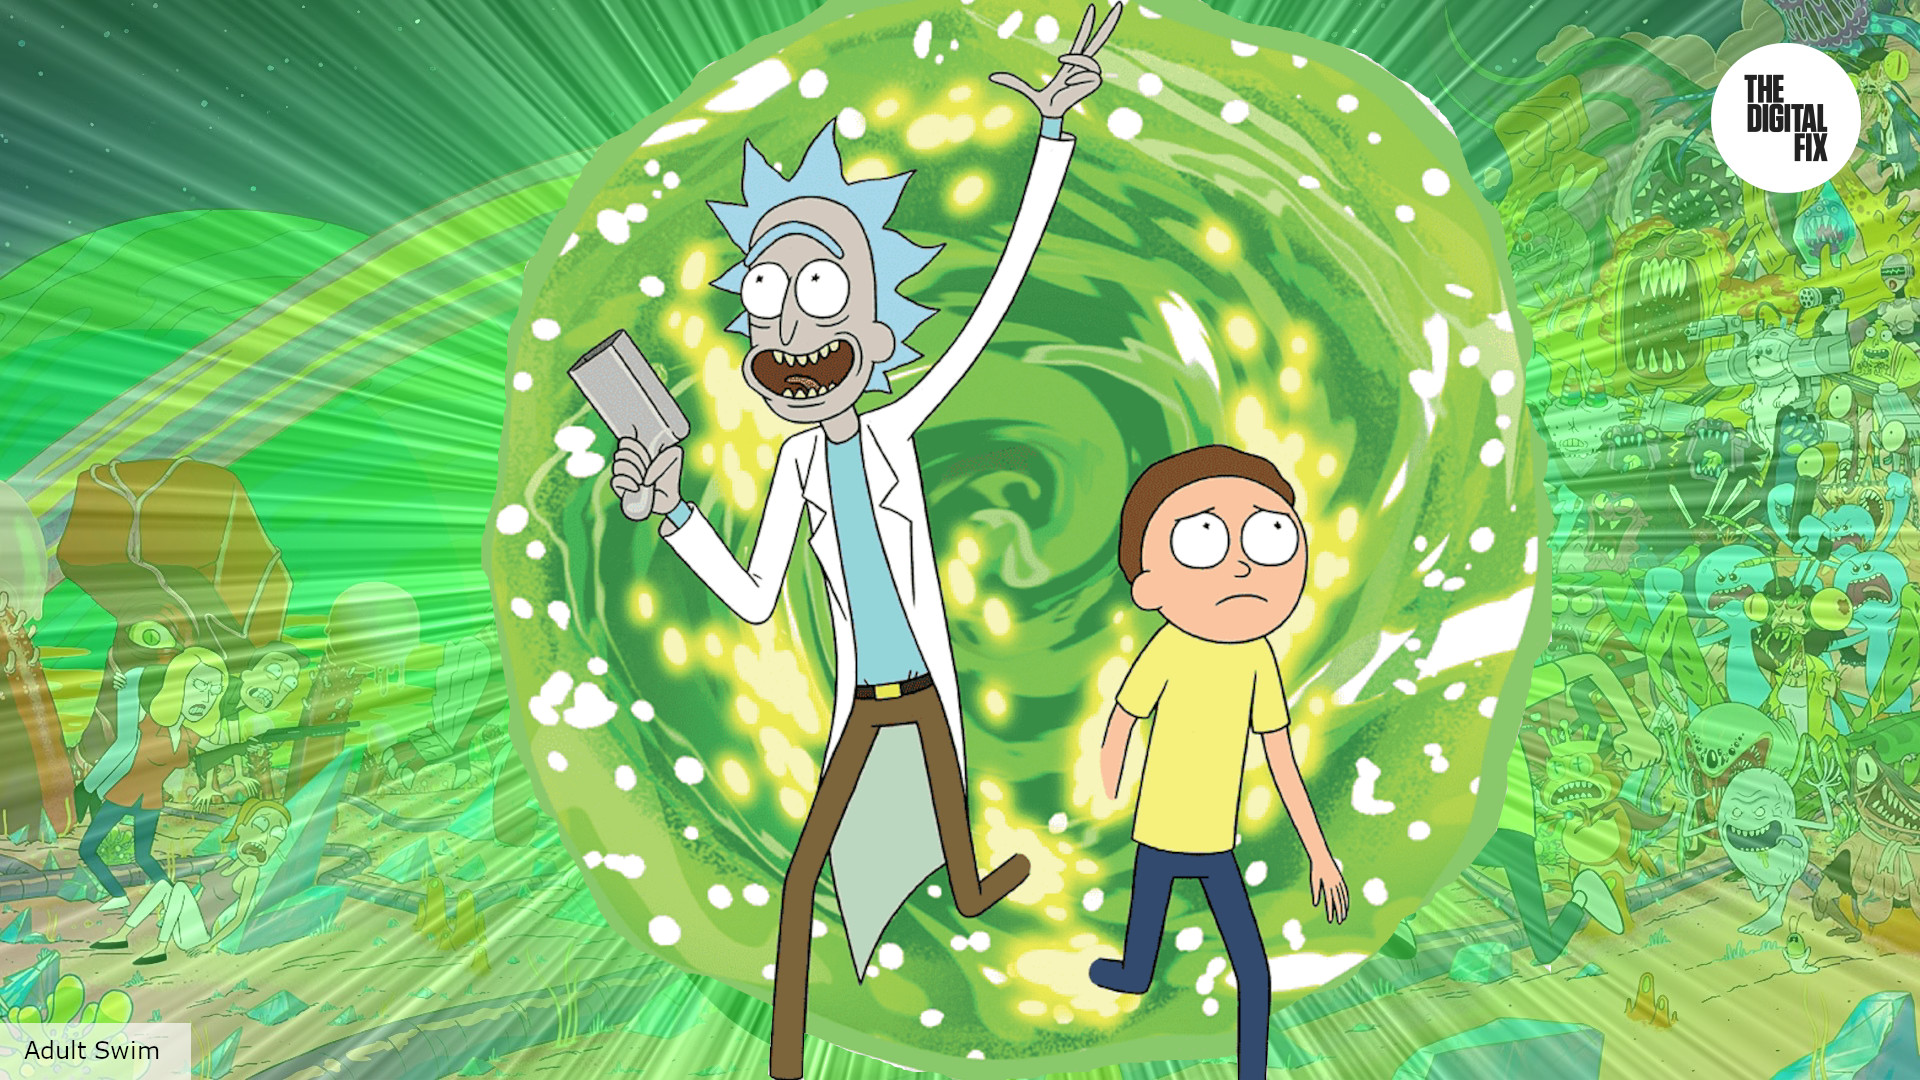 Rick & Morty Promo - Big Active